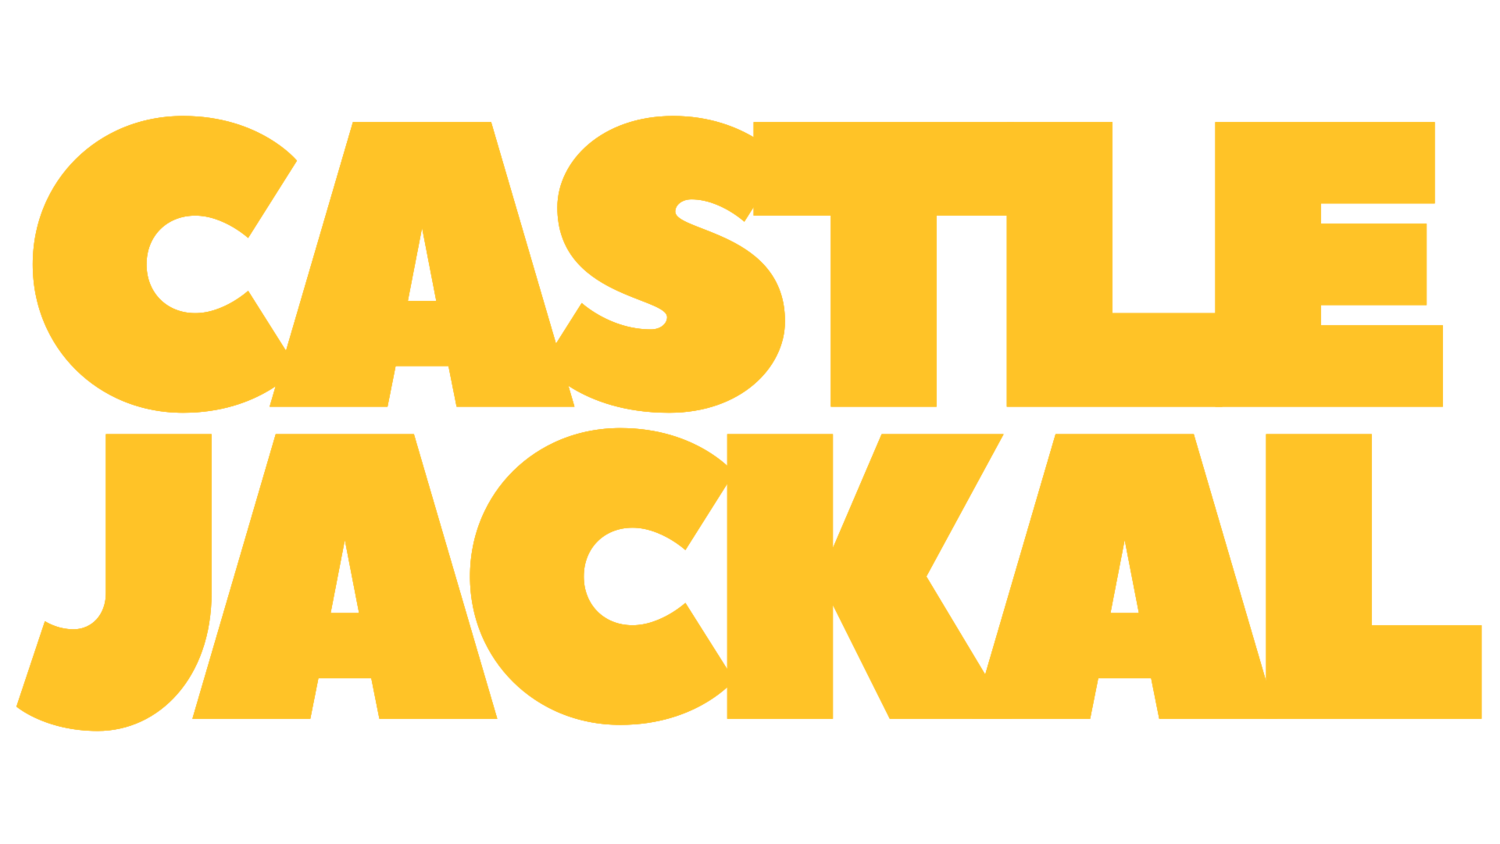 Castle Jackal